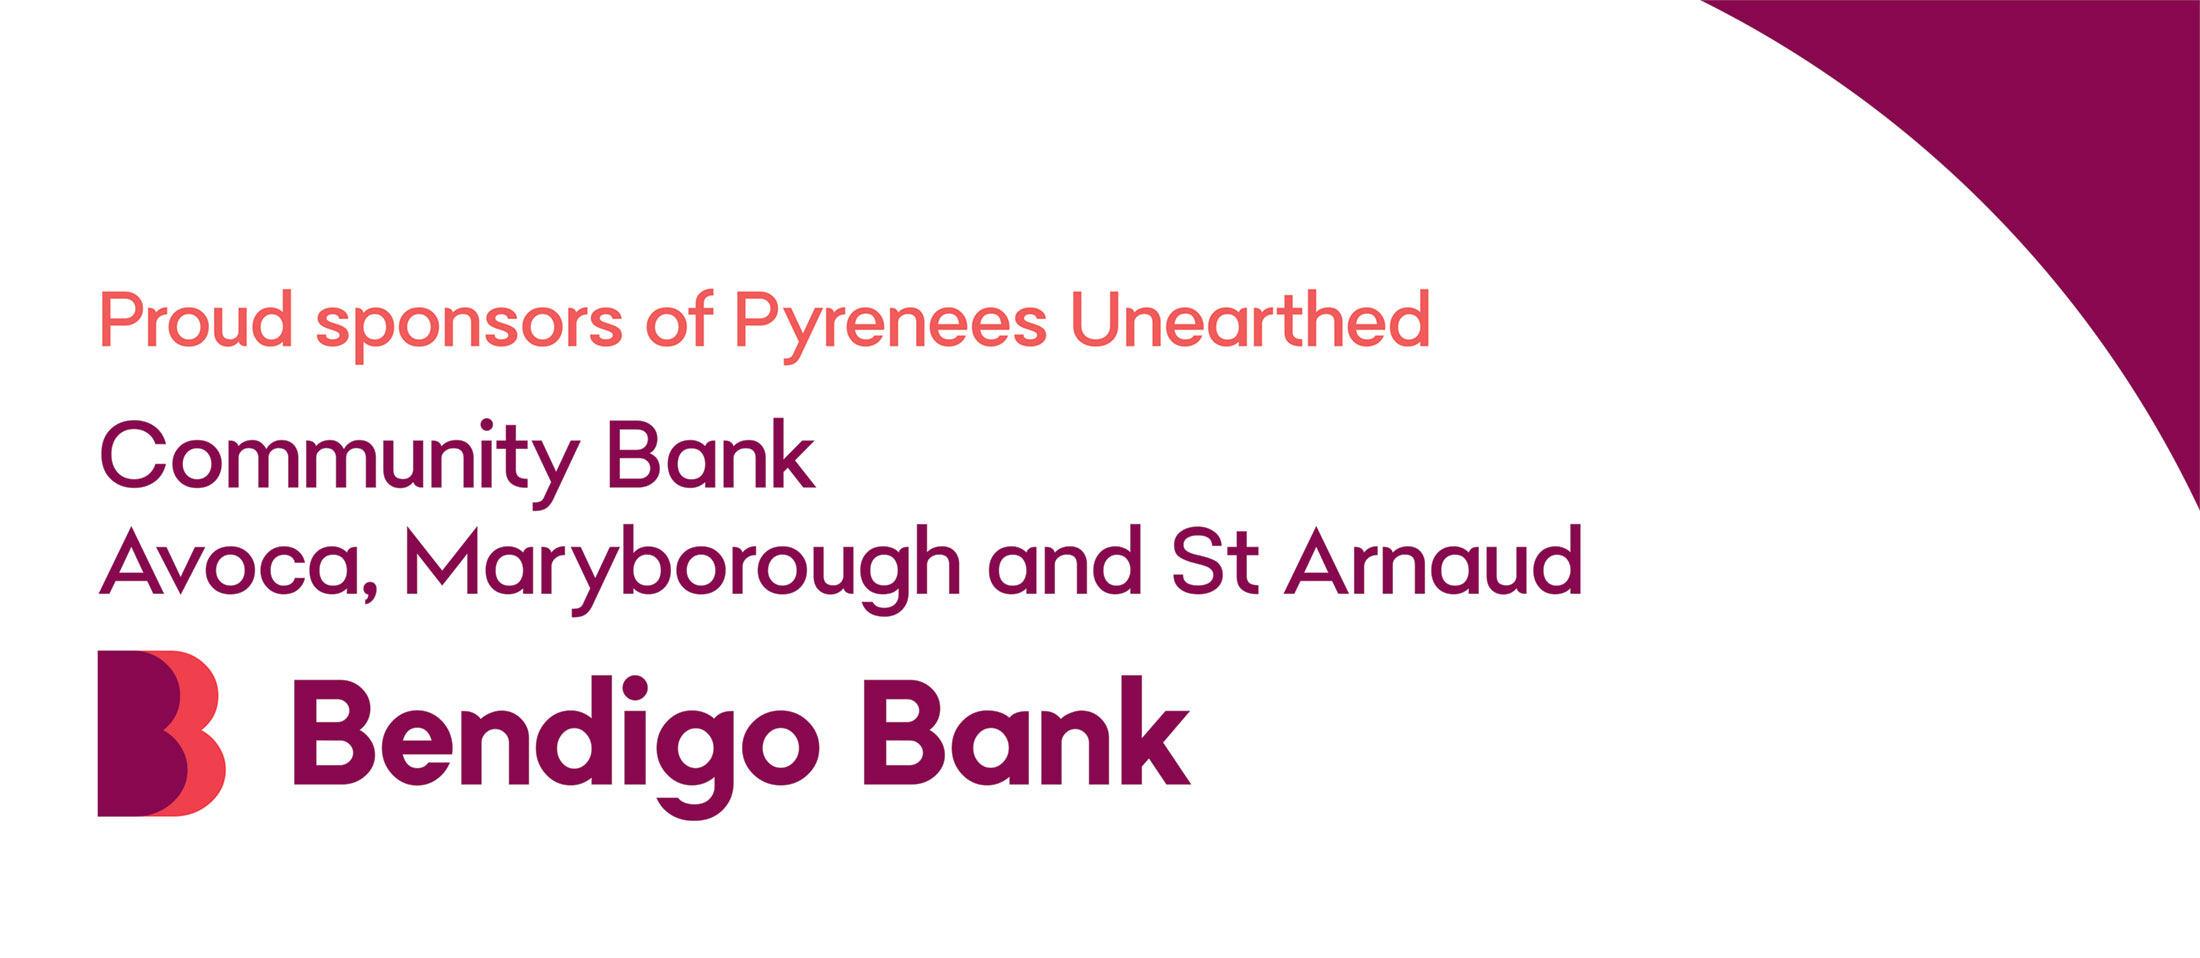 Proudly Sponsored by Bendigo Bank